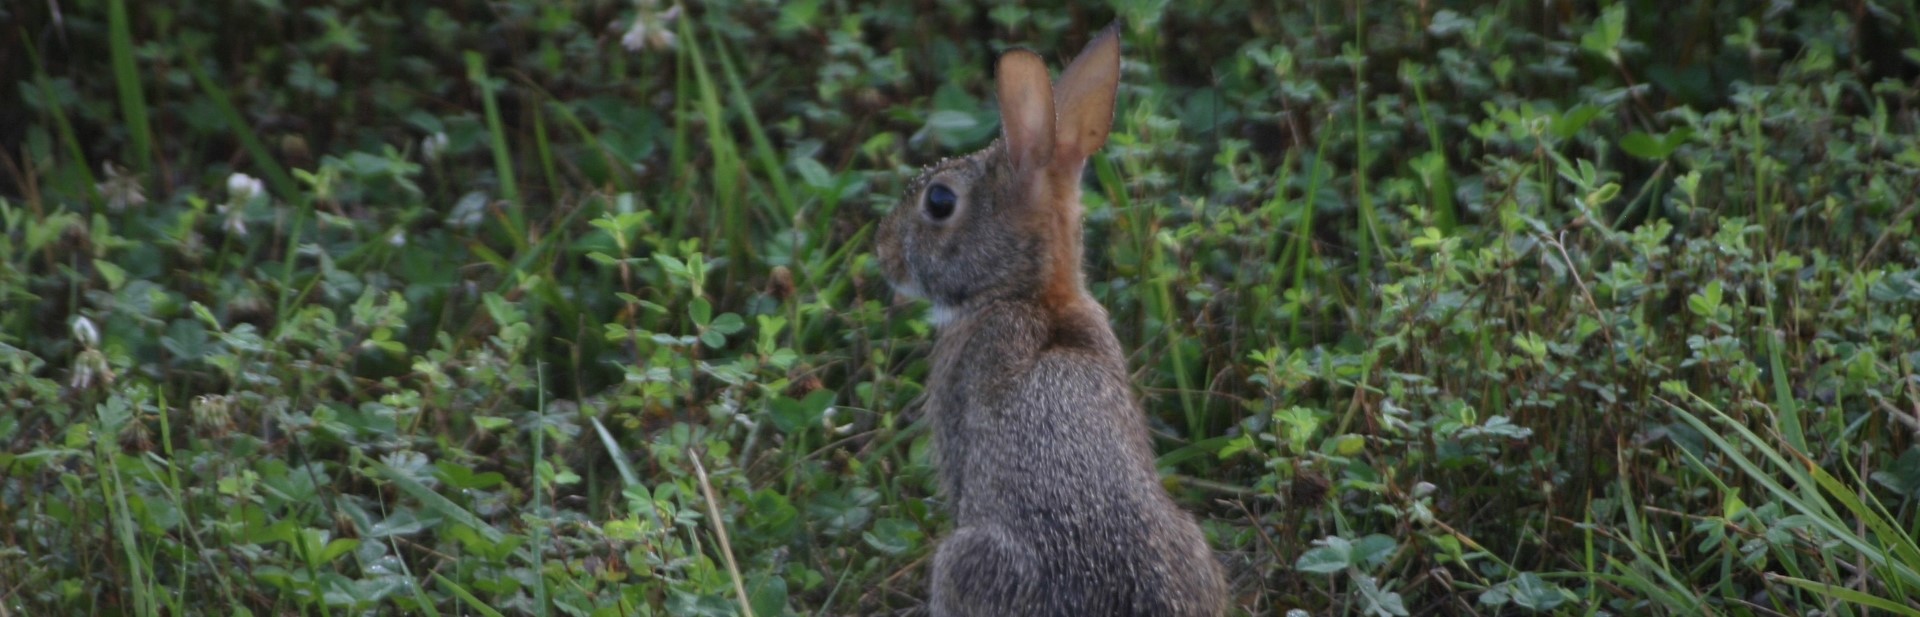 Rabbit Hunting - Kentucky Department of Fish & Wildlife